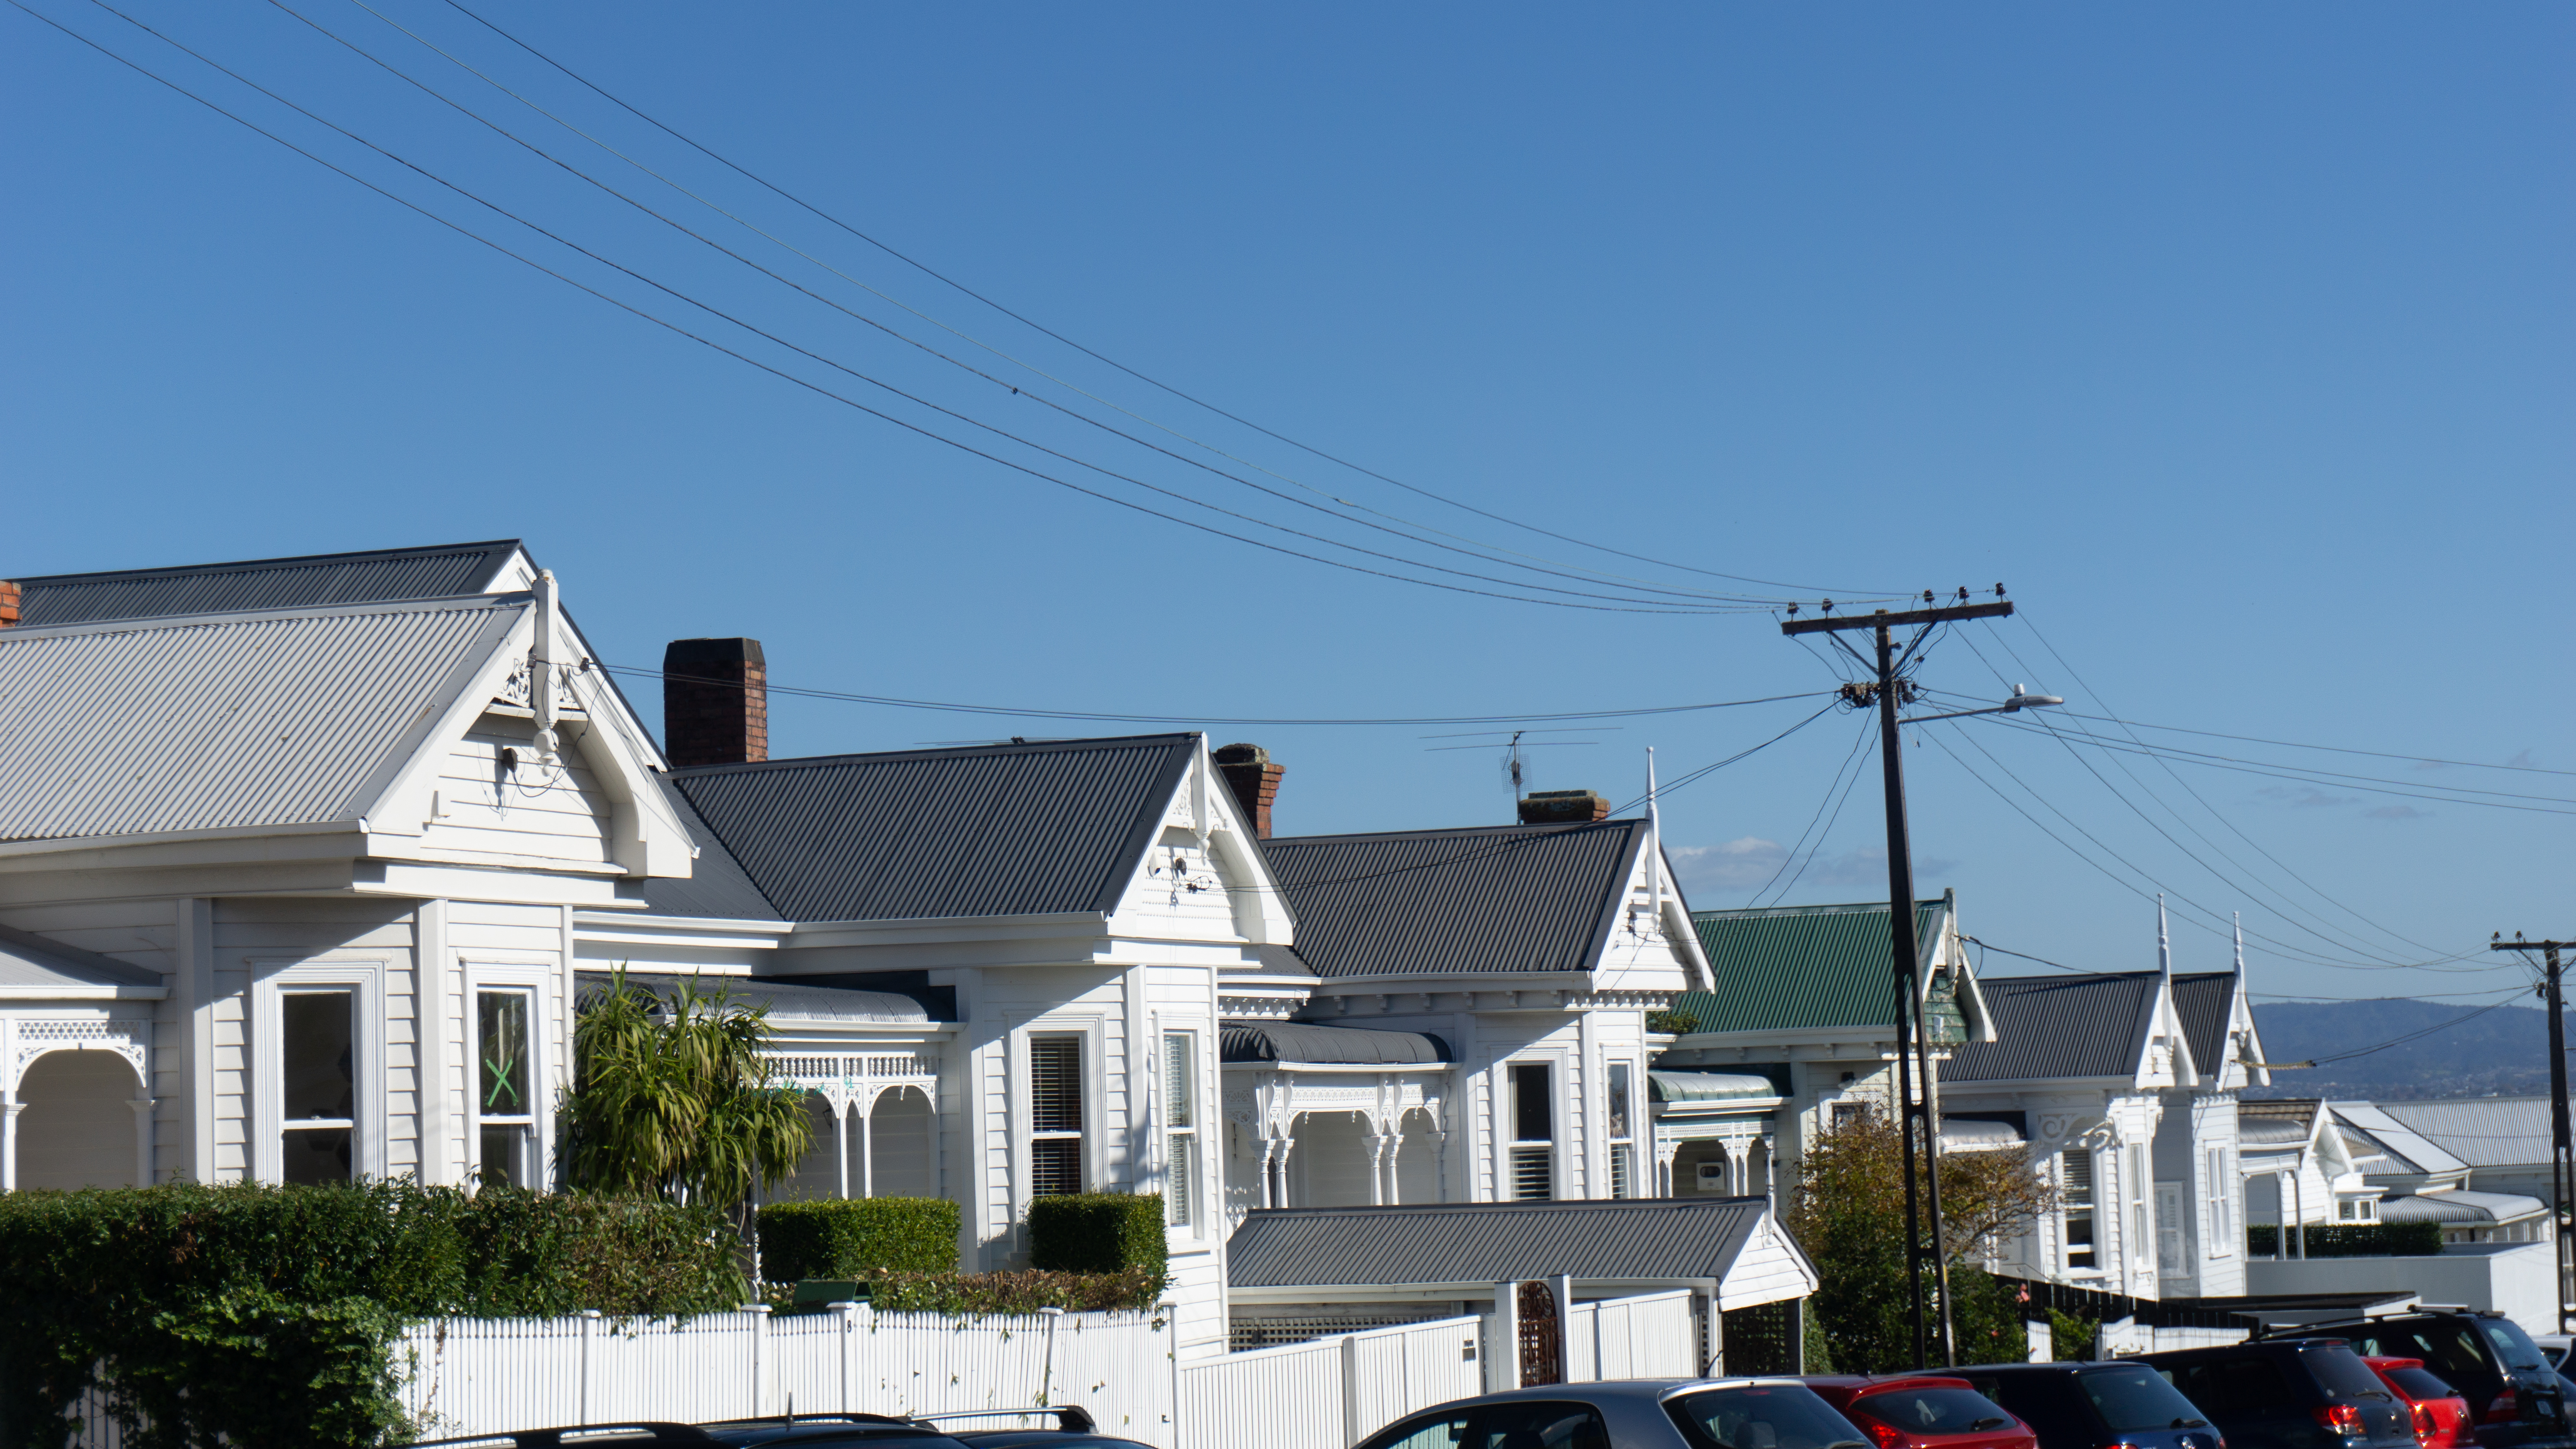 Houses in Wellington